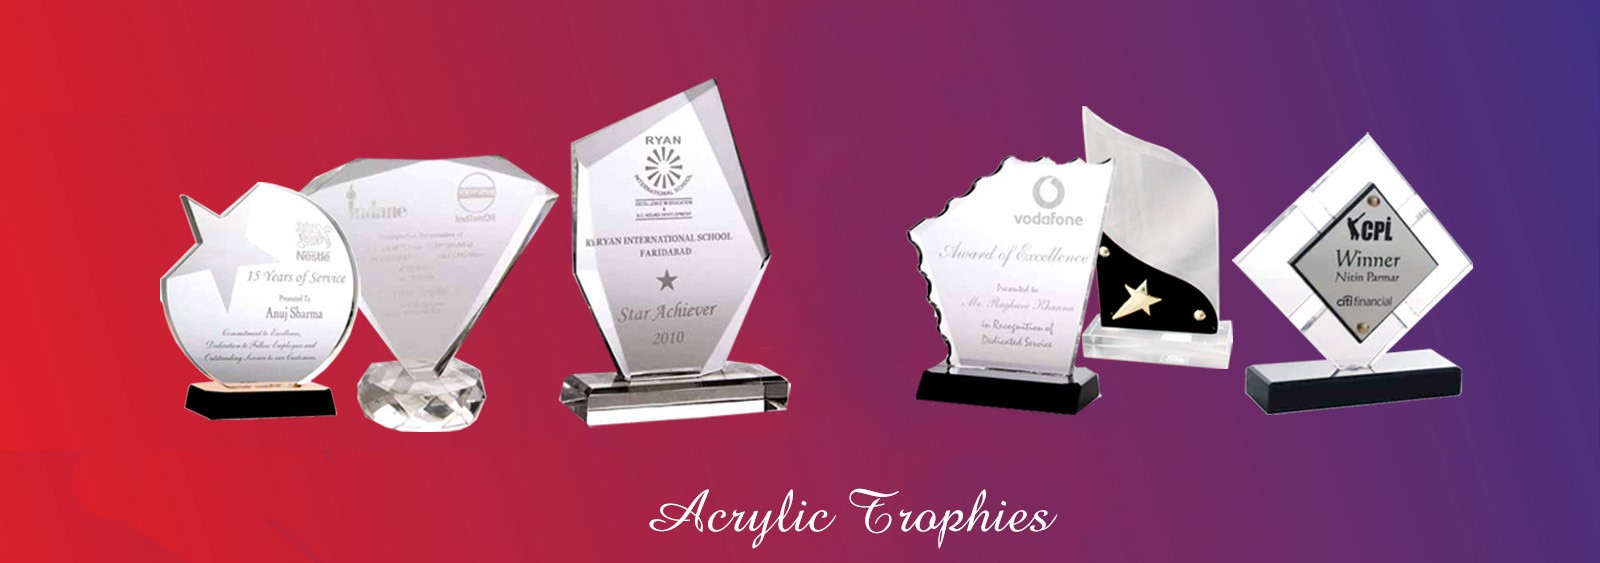 Acrylic Trophy | Prize Land | Acrylic Trophy manufacture in Chandigarh, Acrylic Trophy manufacture in mohali, Acrylic Trophy manufacture in zirakpur, Acrylic Trophy manufacture in Panchkula - GLK1975